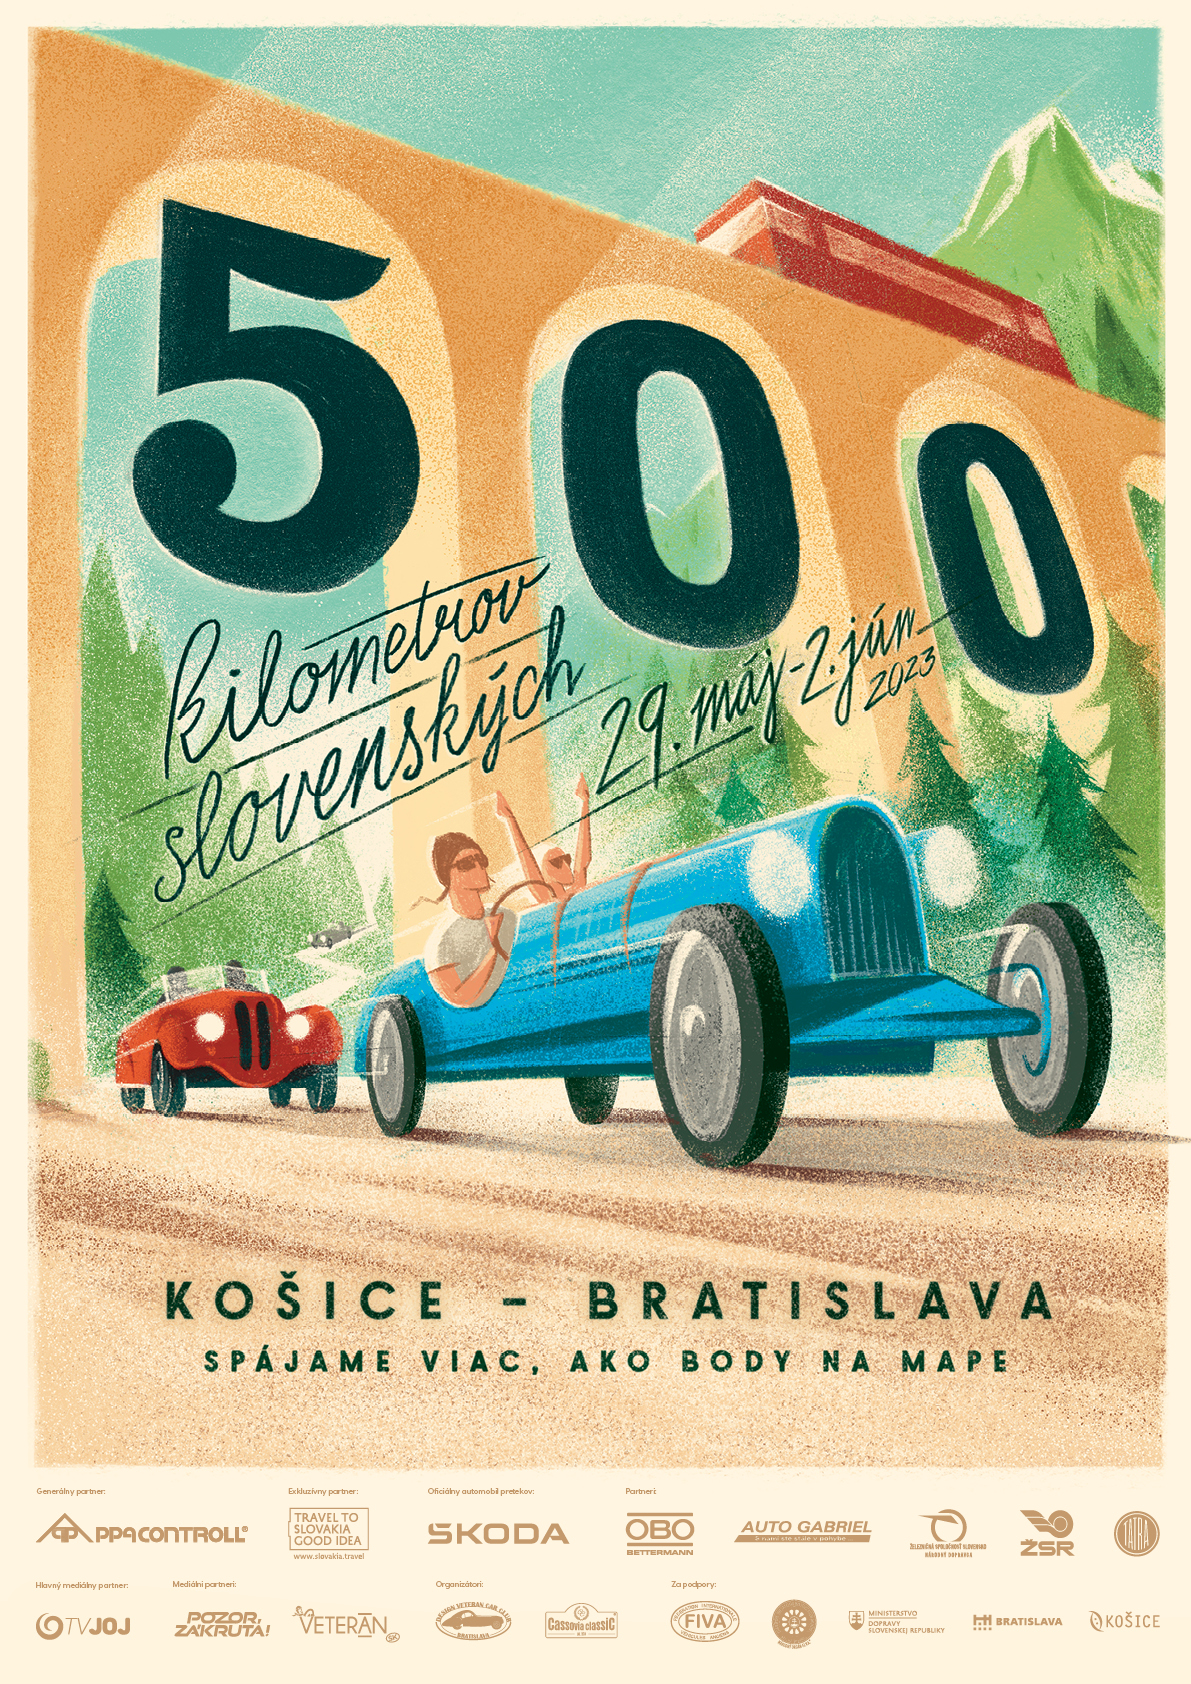 500_km-poster